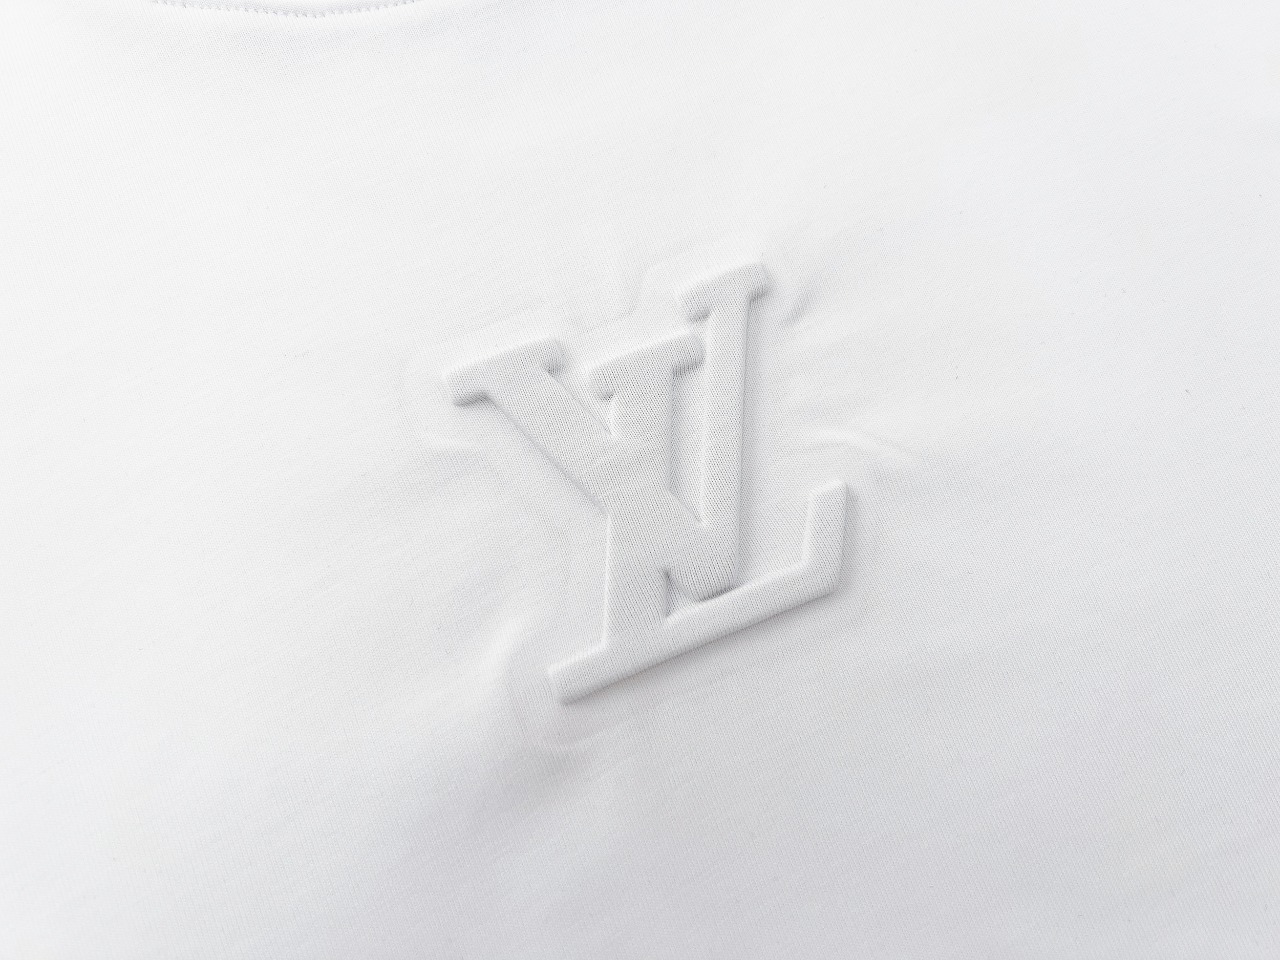 Louis Vuitton Embossed LV T-Shirt Blanc Optique White